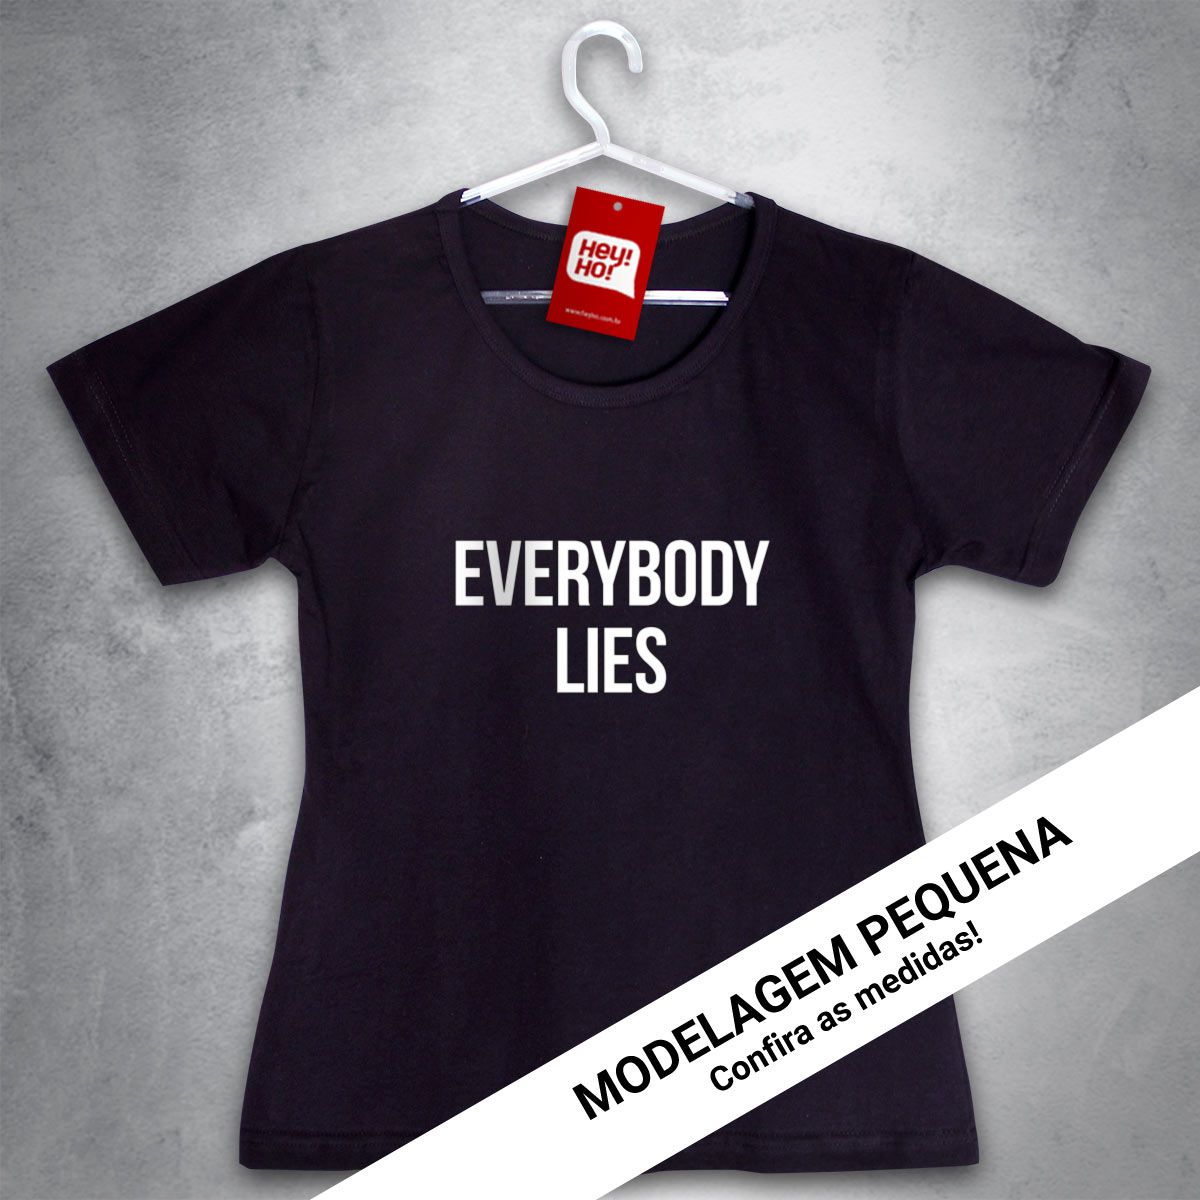 OFERTA - HOUSE - Everybody lies - Baby Look Preta - Tamanho M